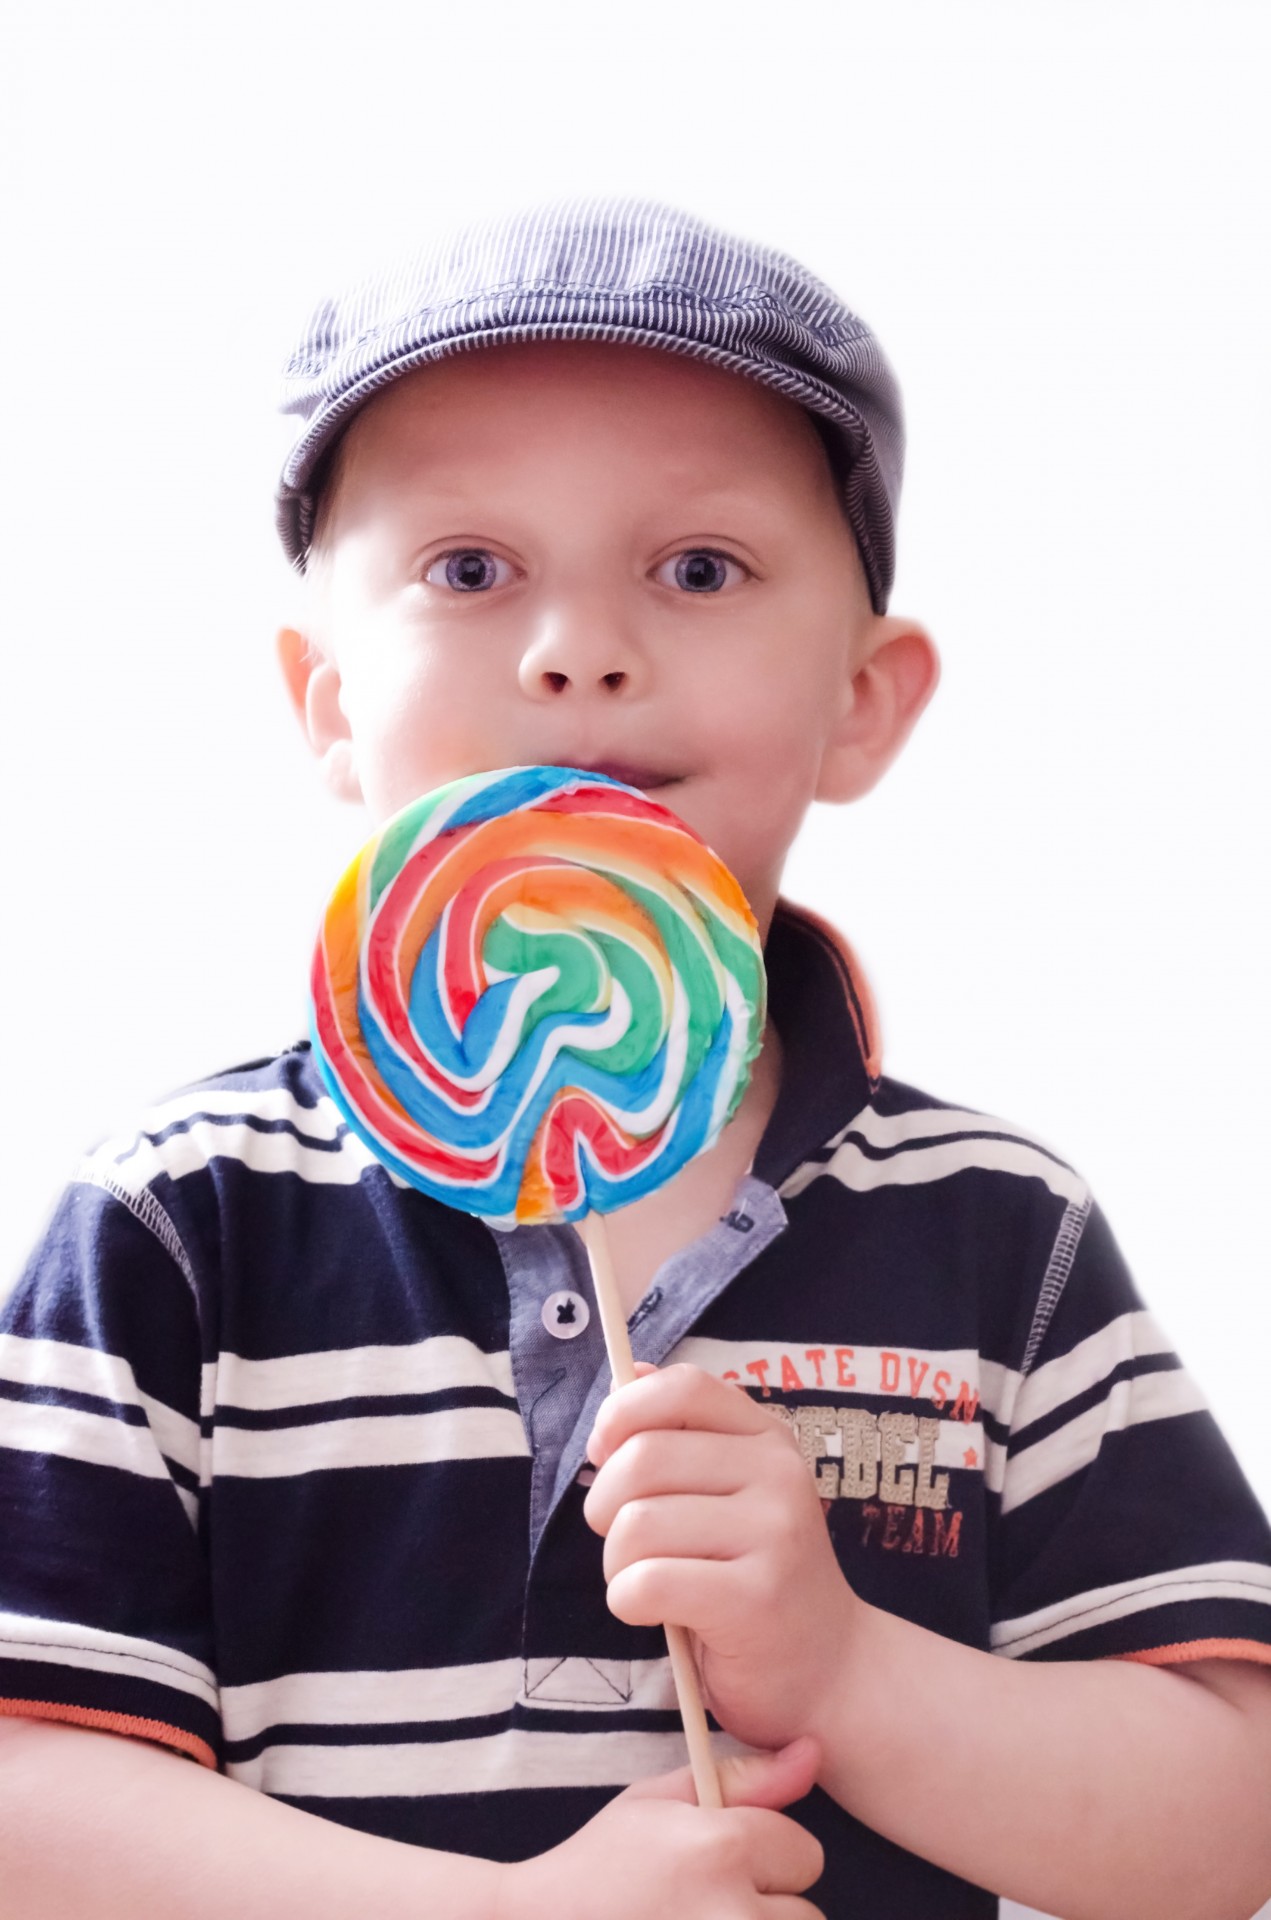 Child With Lollipop